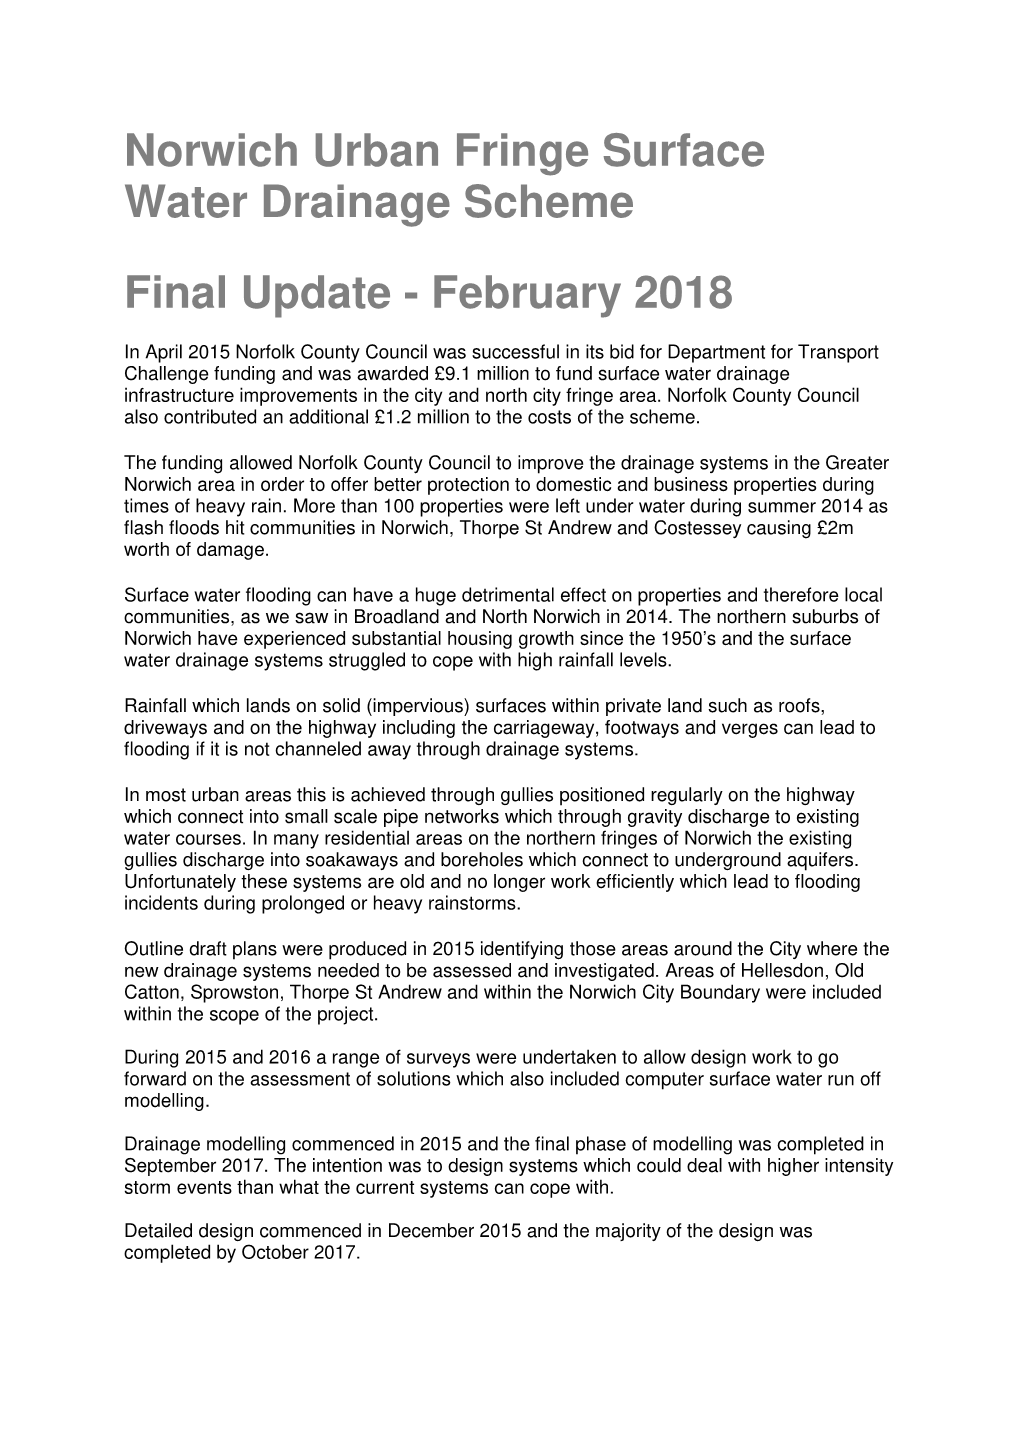 Norwich Surface Water Drainage Scheme Update February 2018